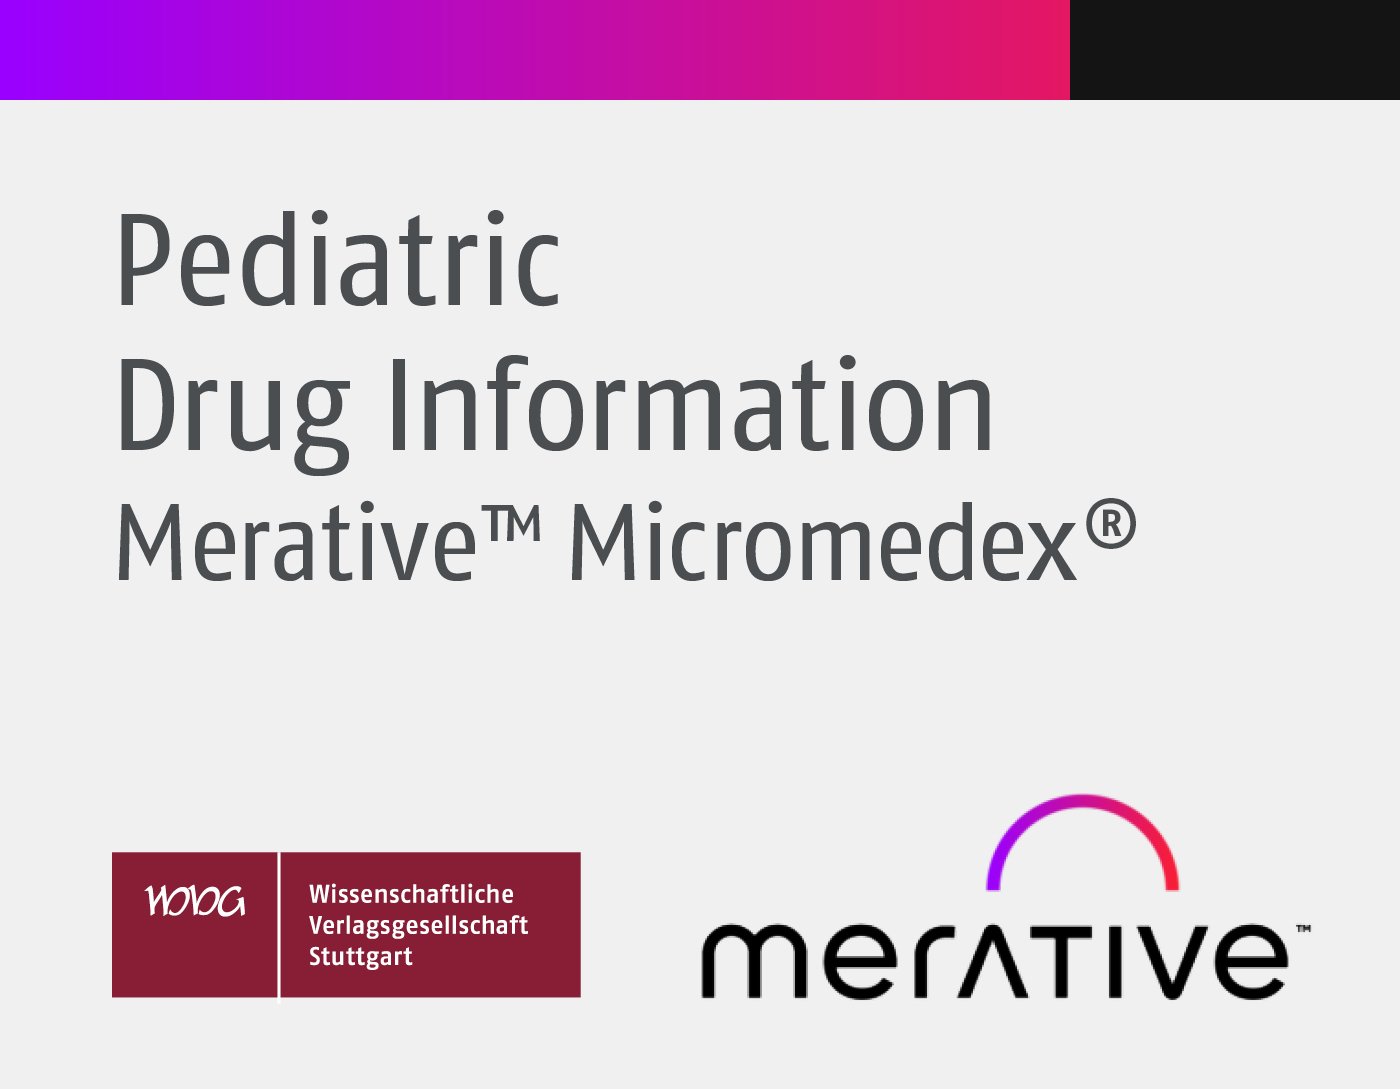 Standard Pediatrics Drug Information